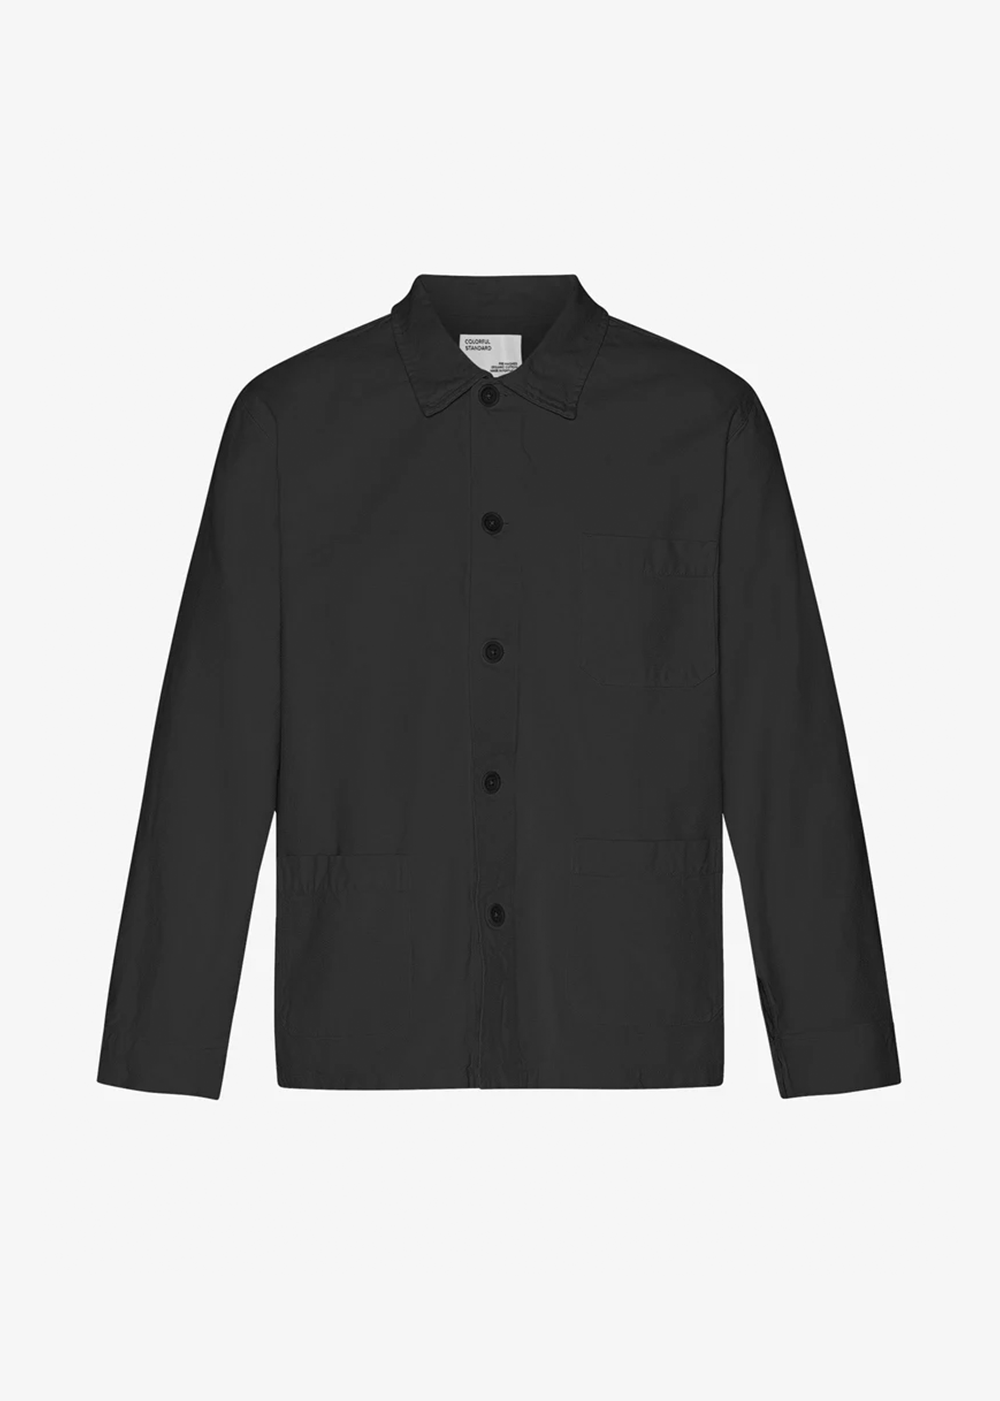 Organic Workwear Jacket - Deep Black - Colorful Standard Canada - Danali